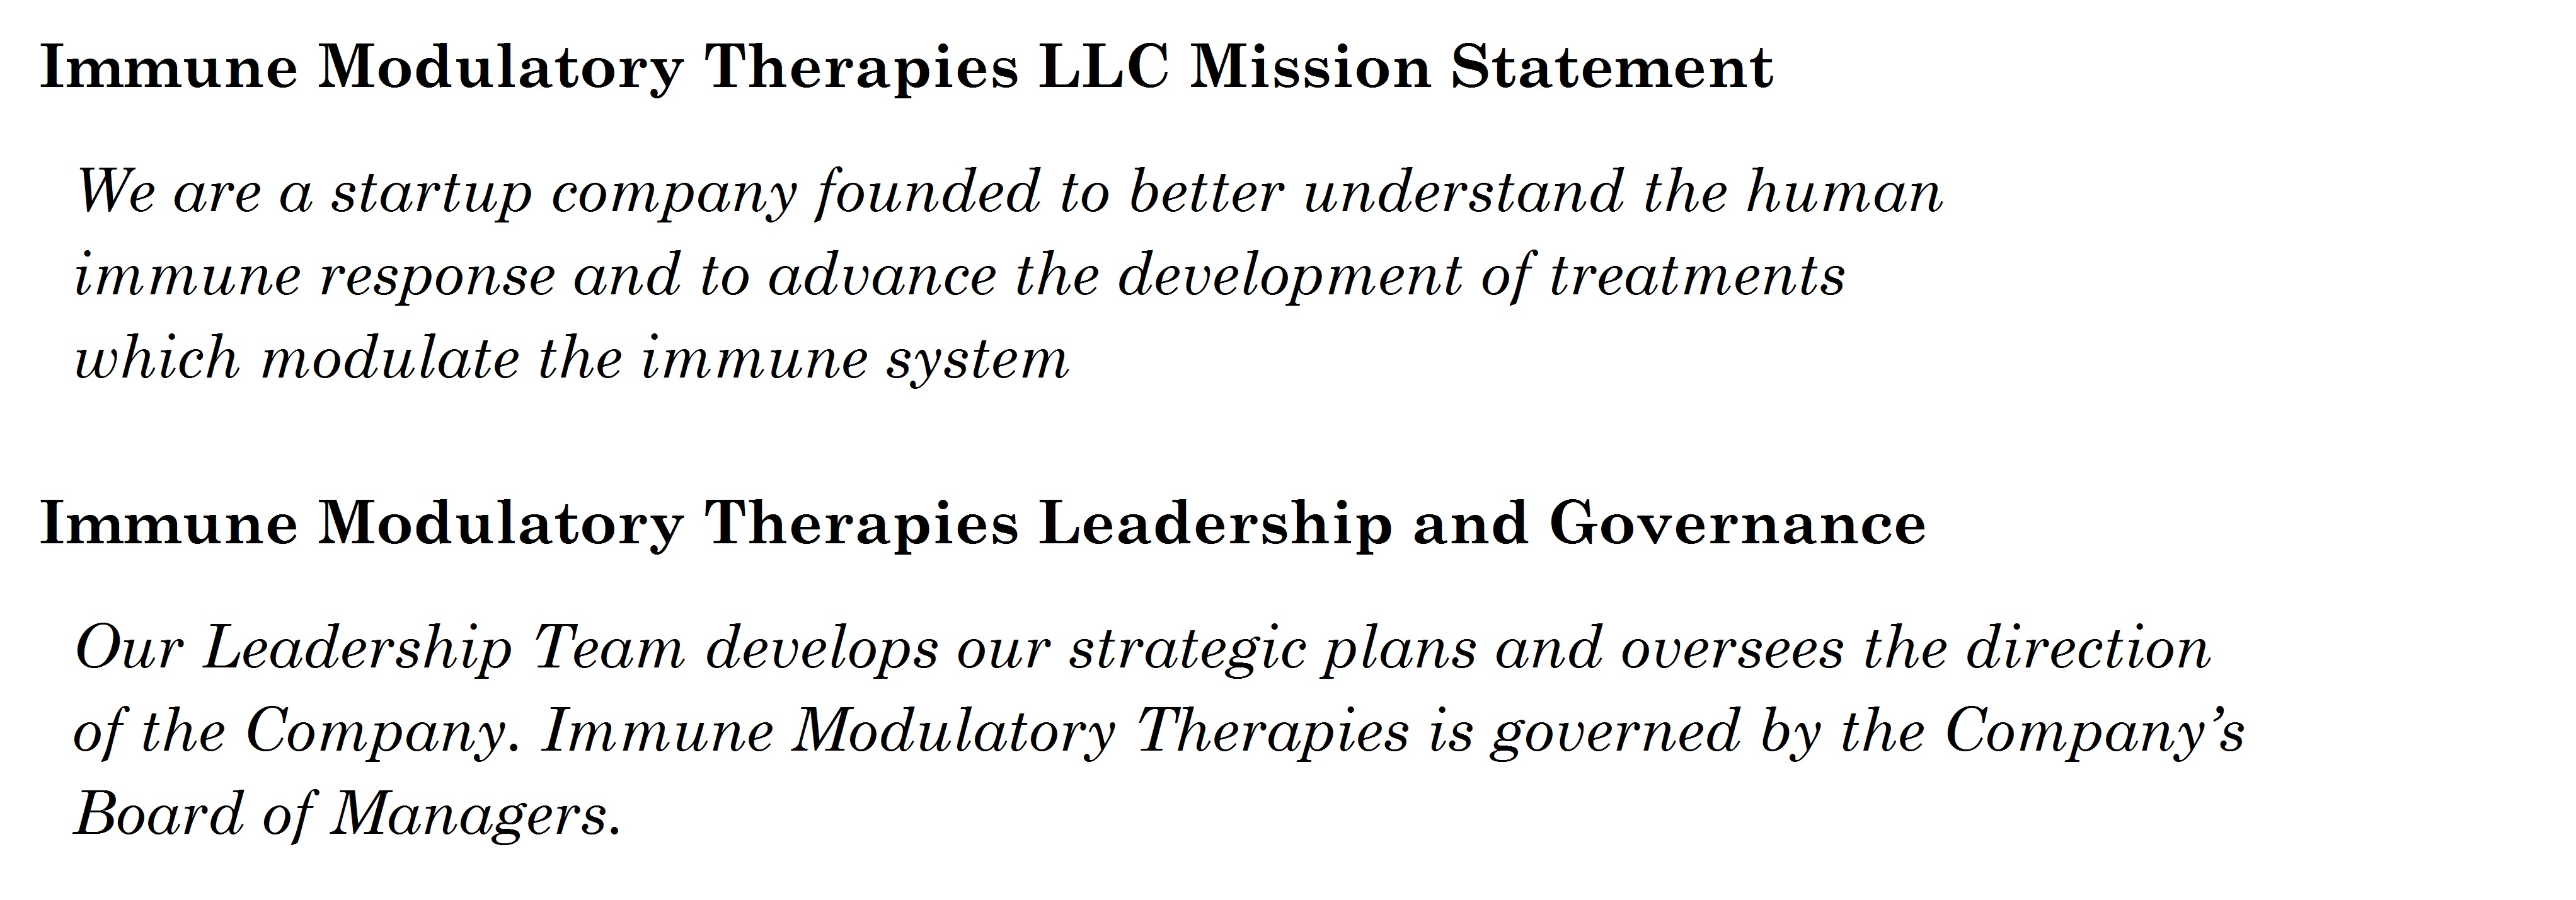 Immune Modulatory Therapies LLC Mission